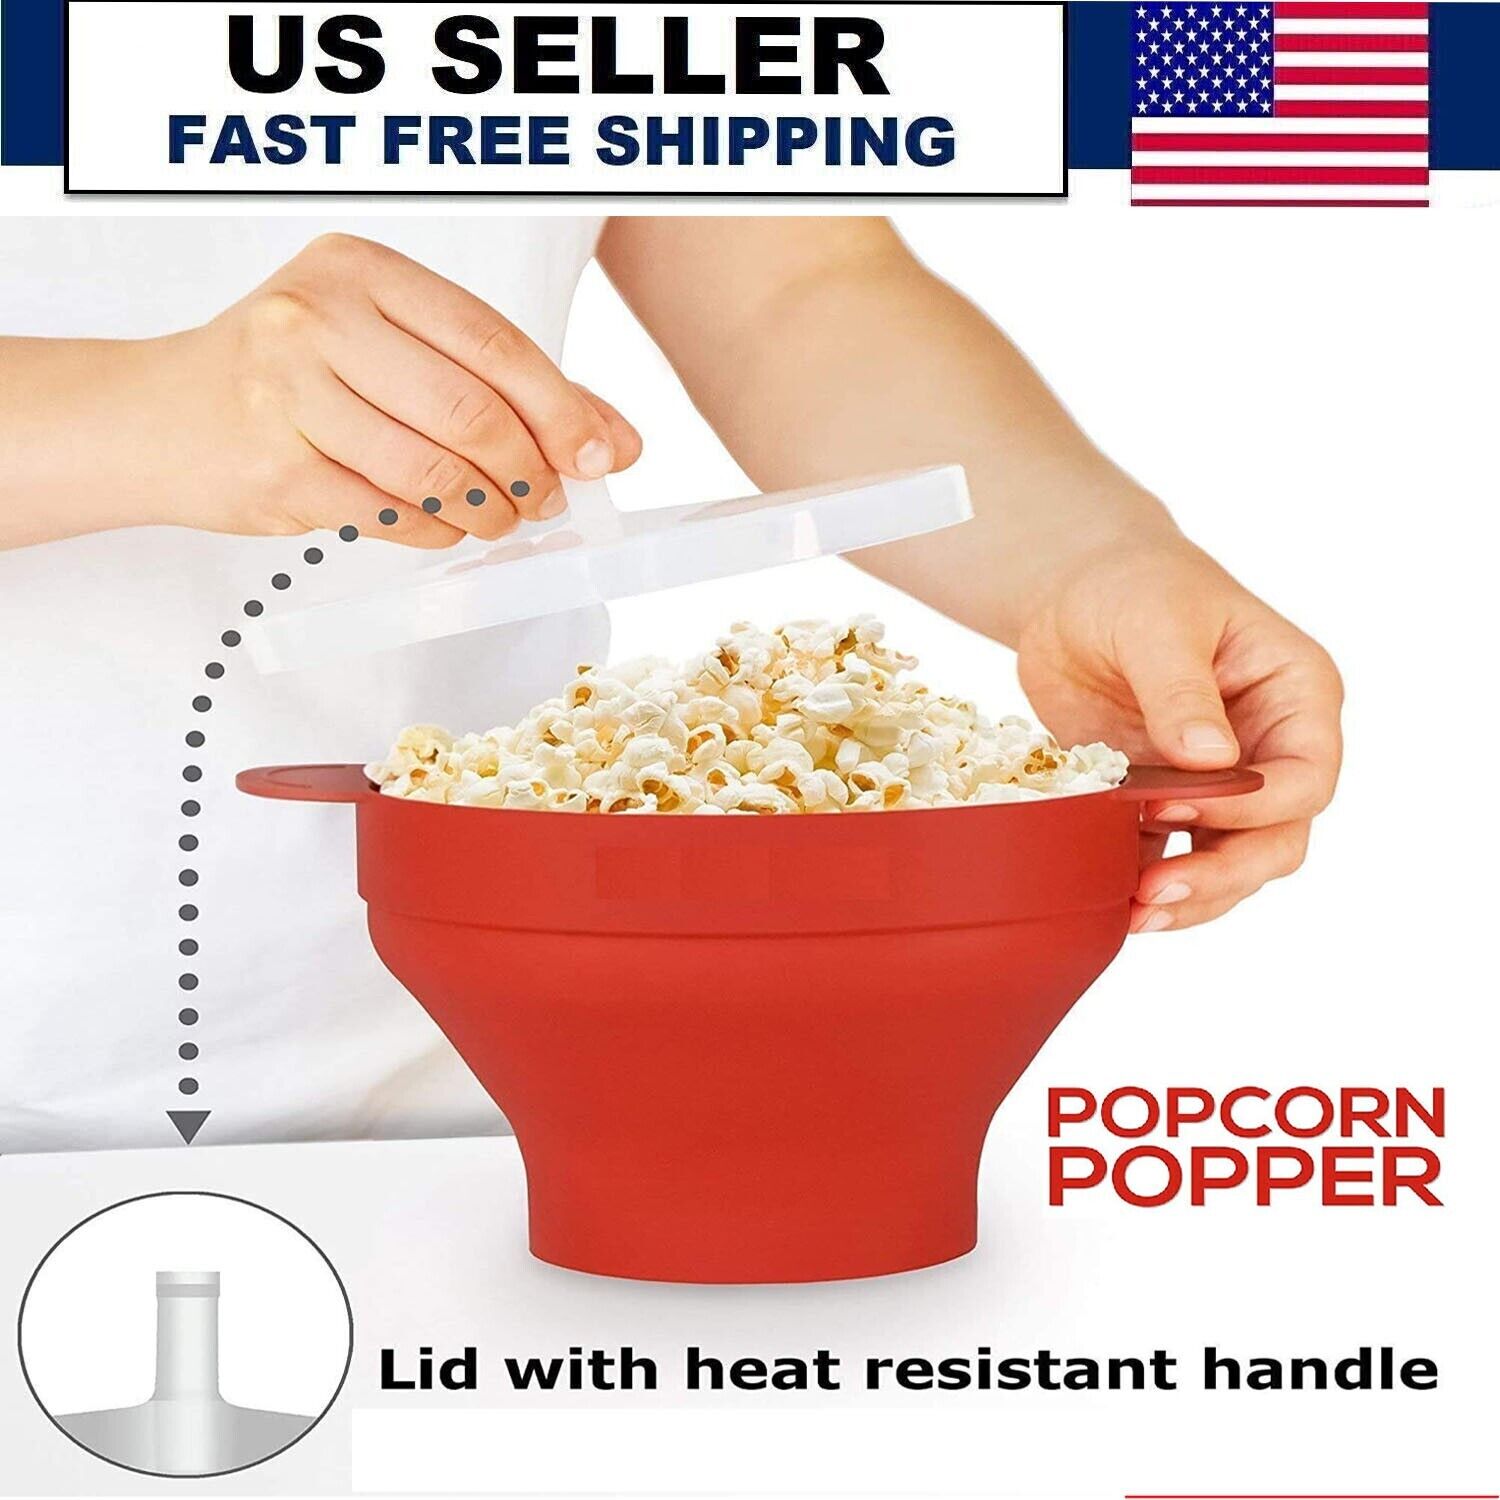 Popcorn Maker Cup Home Pop Corn Popper Machine Cooker Snack Hot Microwave Bowl